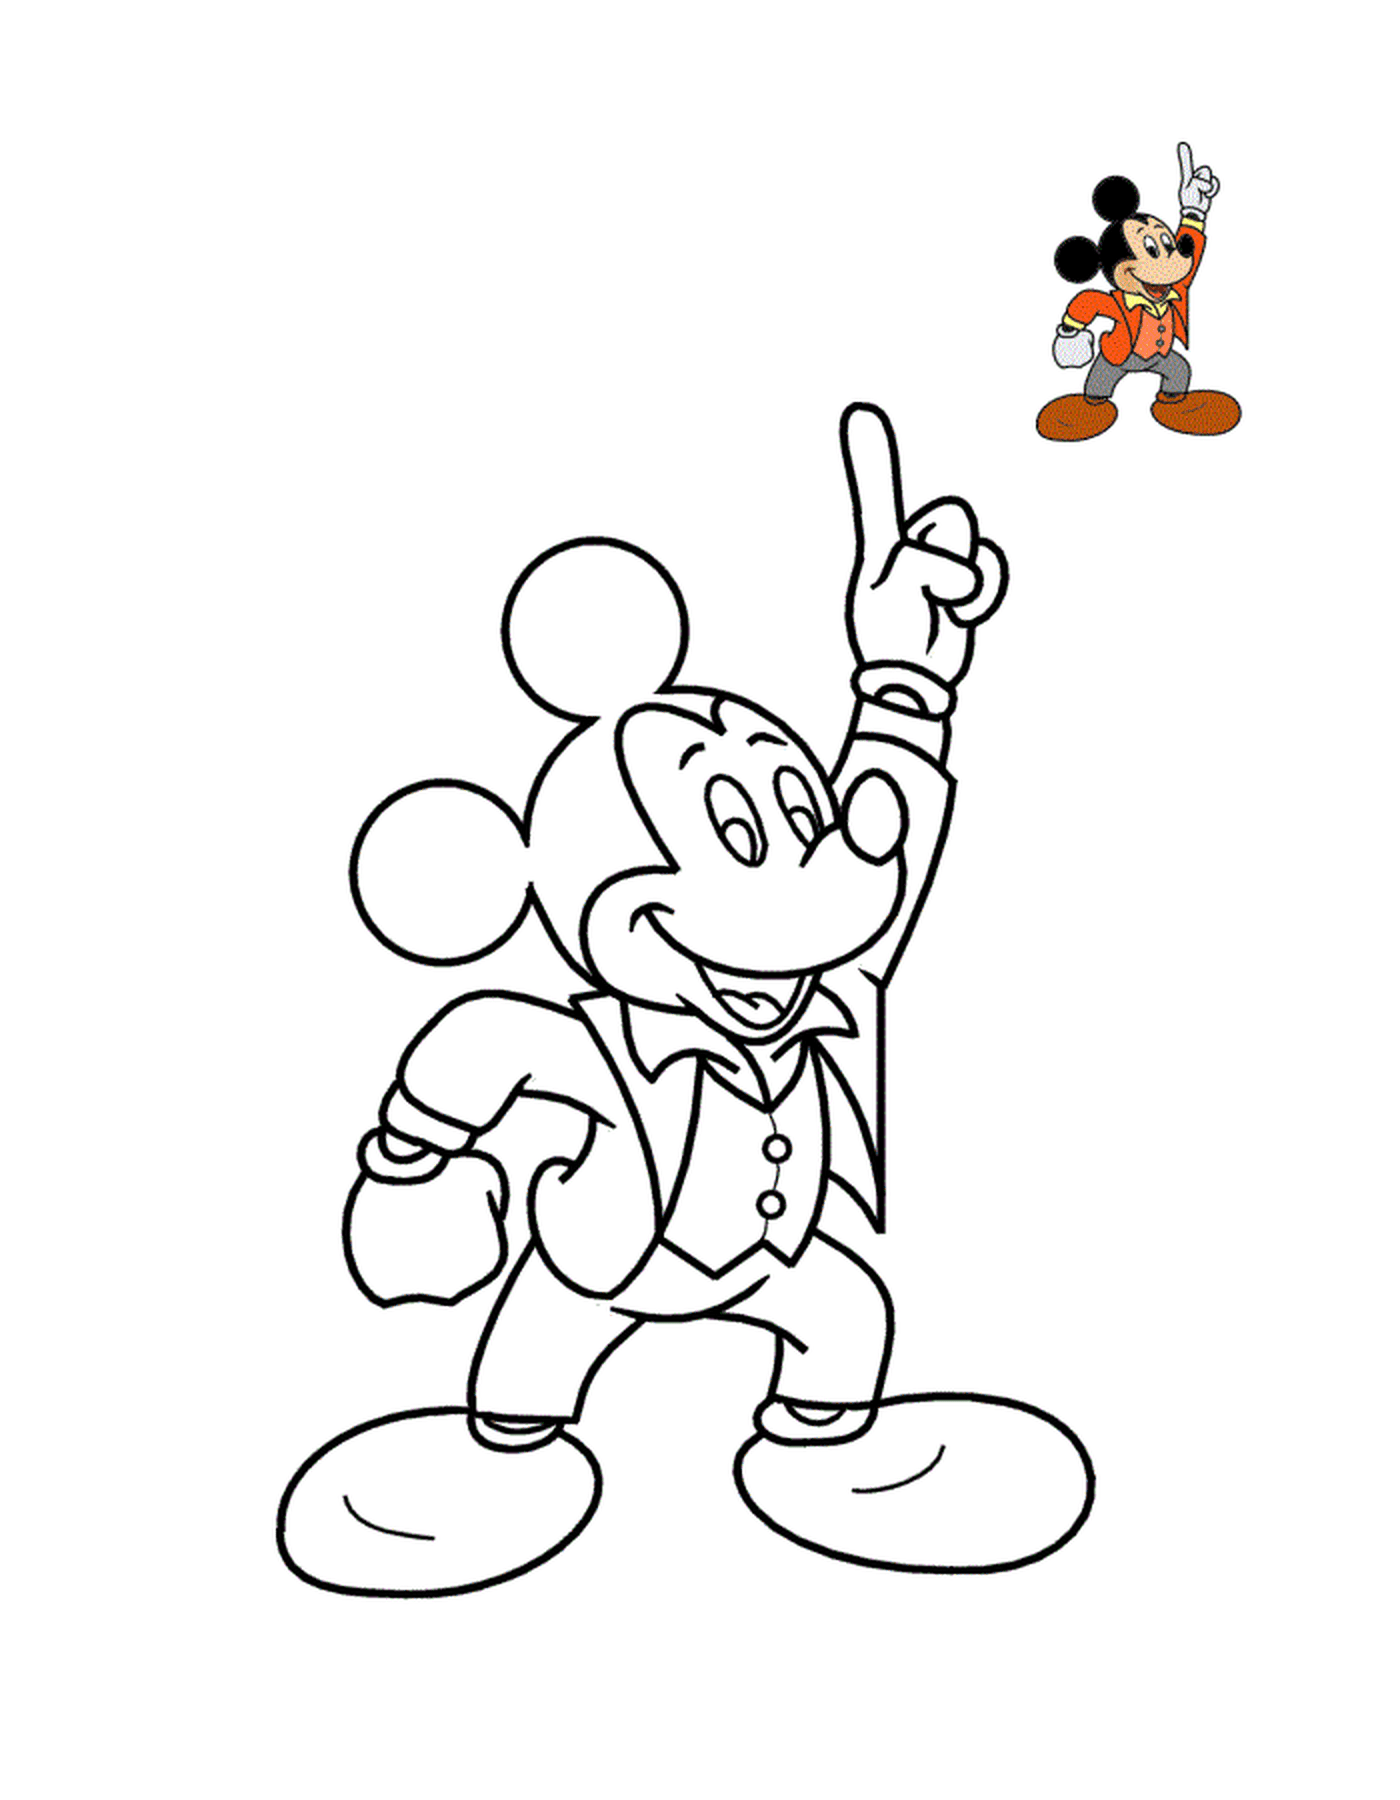  Mickey Mouse, ein Star der Comic-Show 